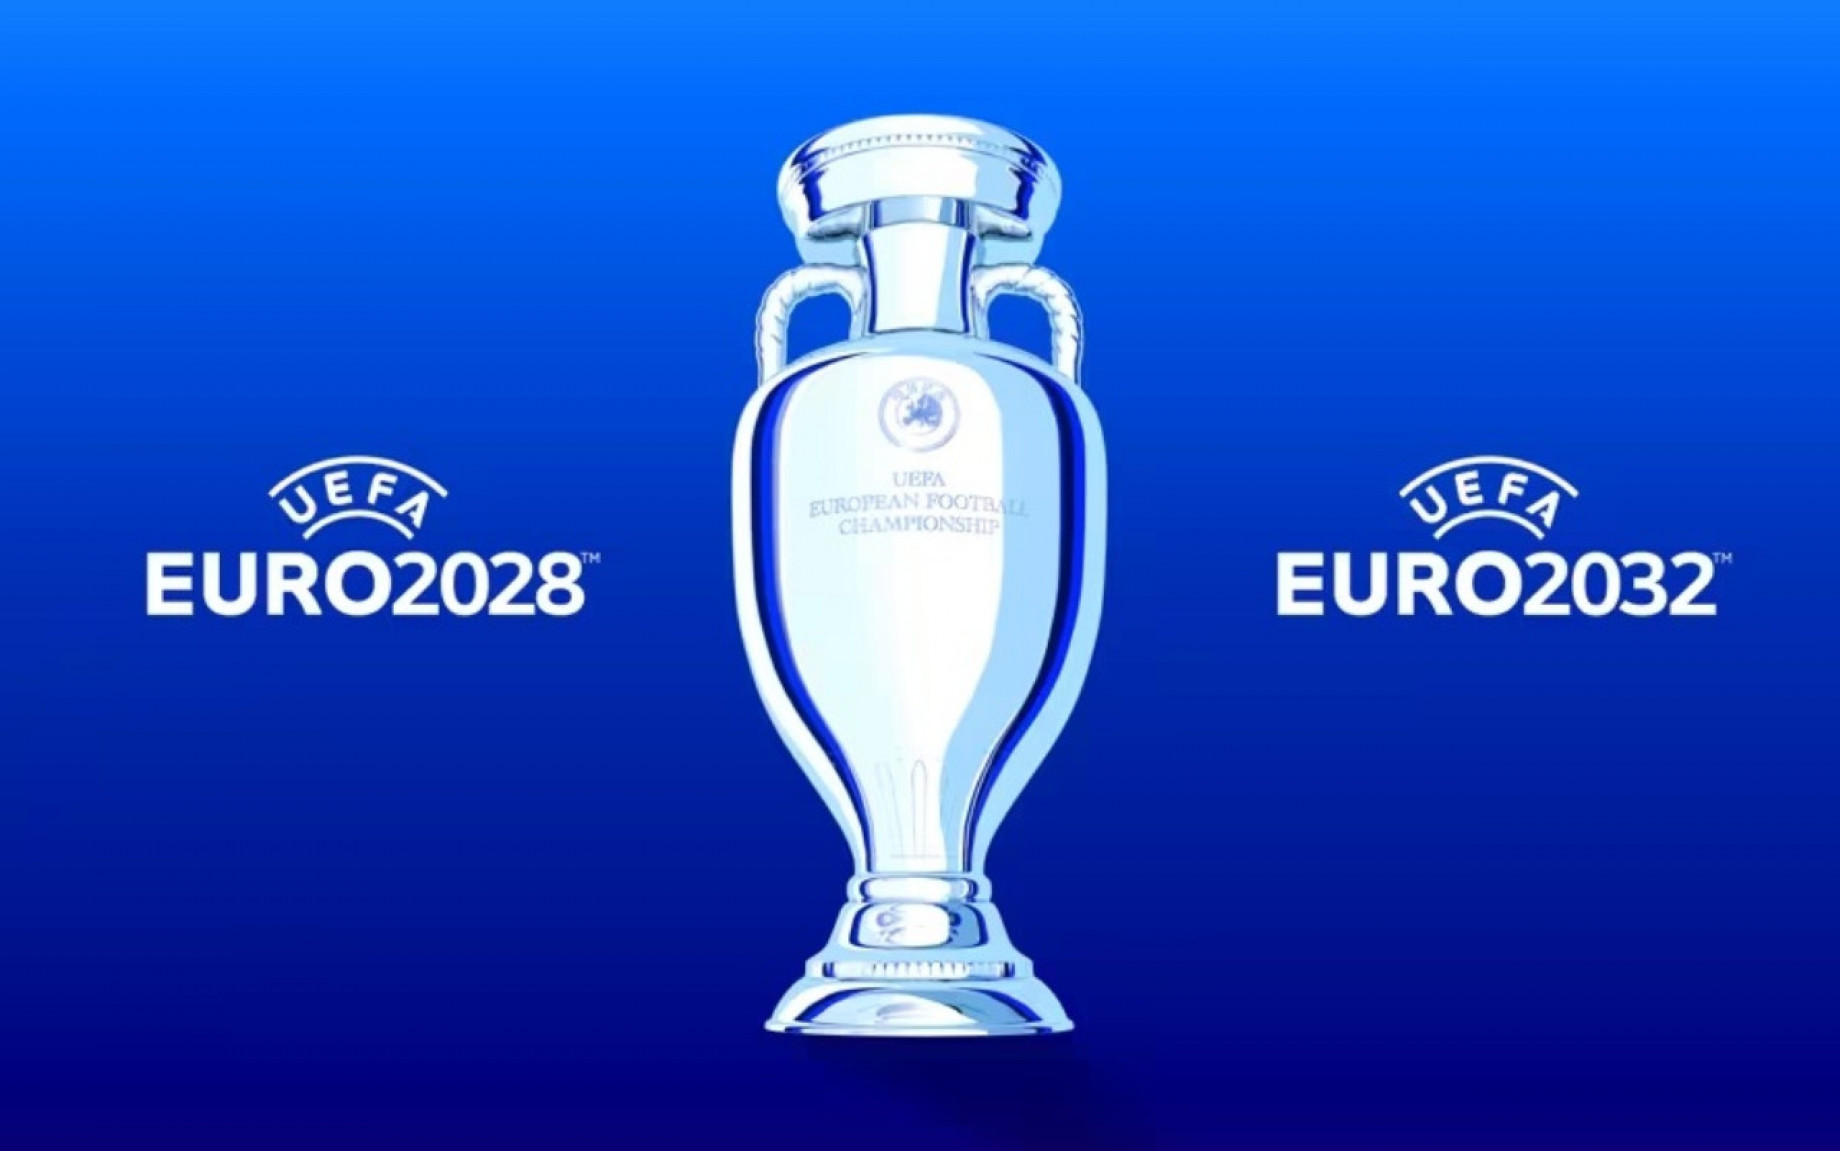 grafica-euro-2028-2032-gpo.jpg